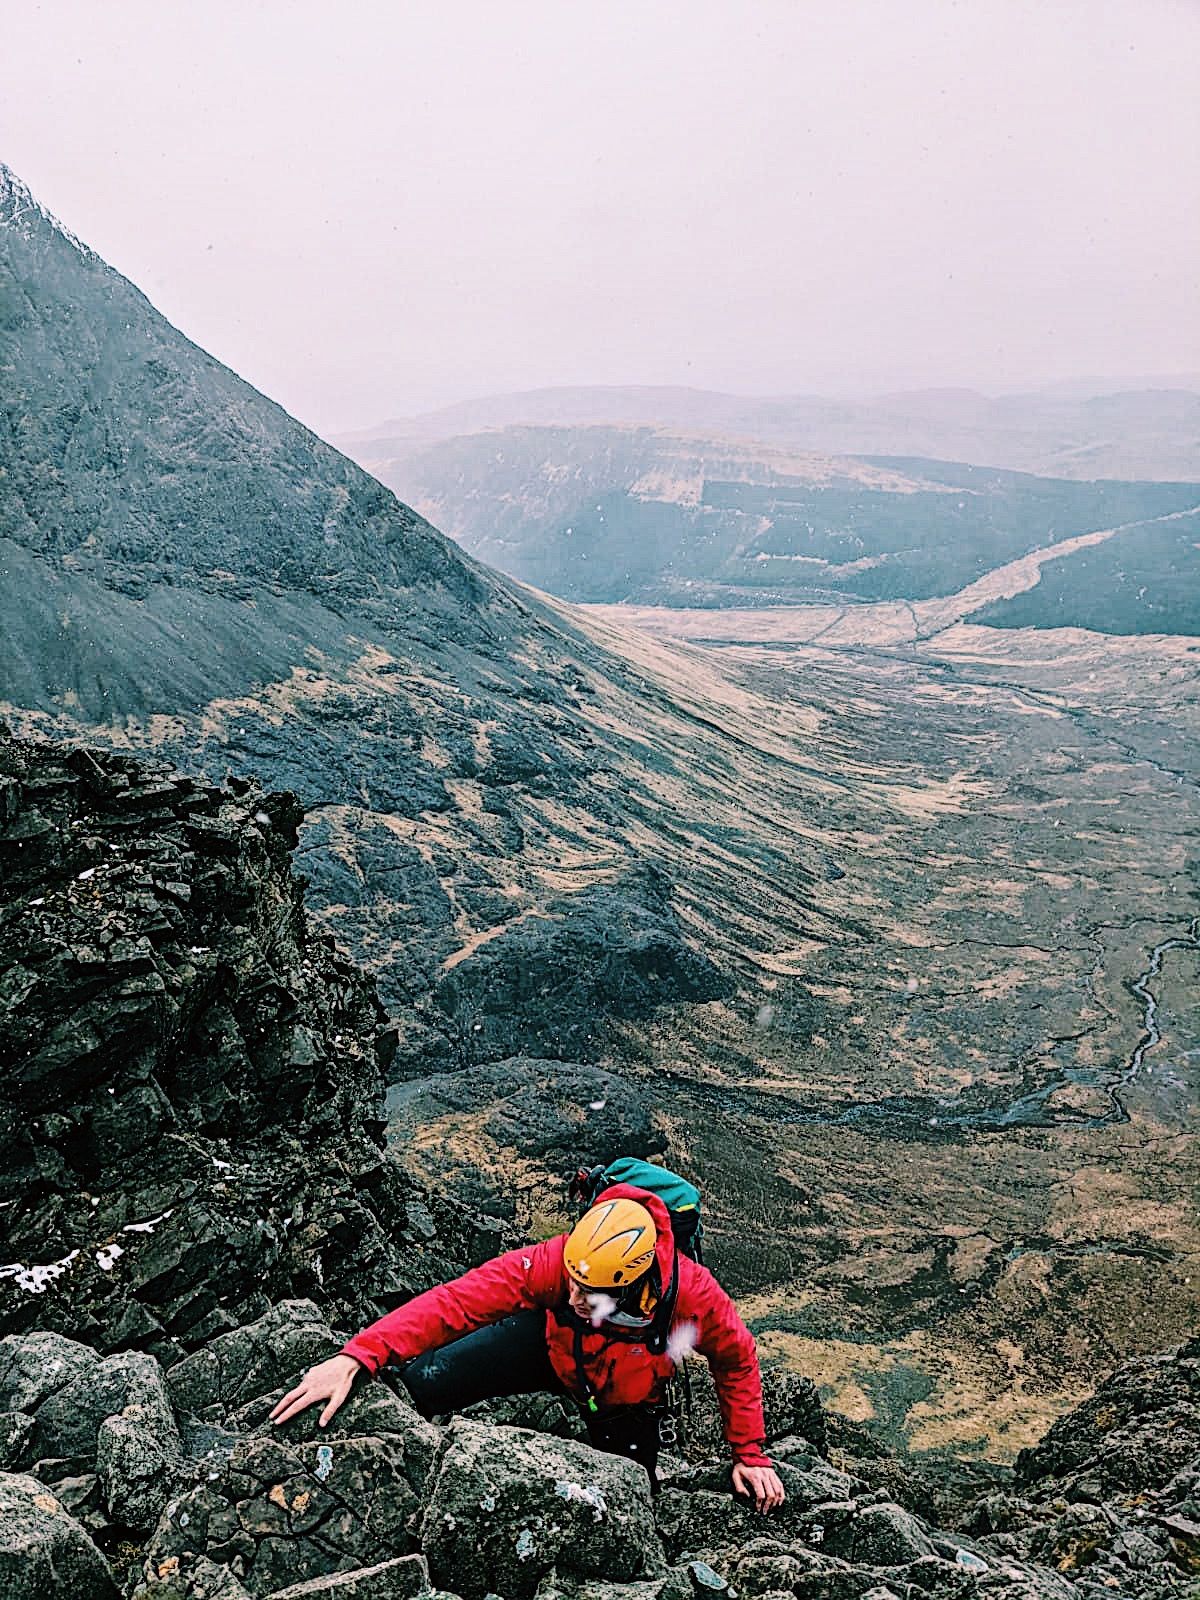 A climber on the Isle of Skye